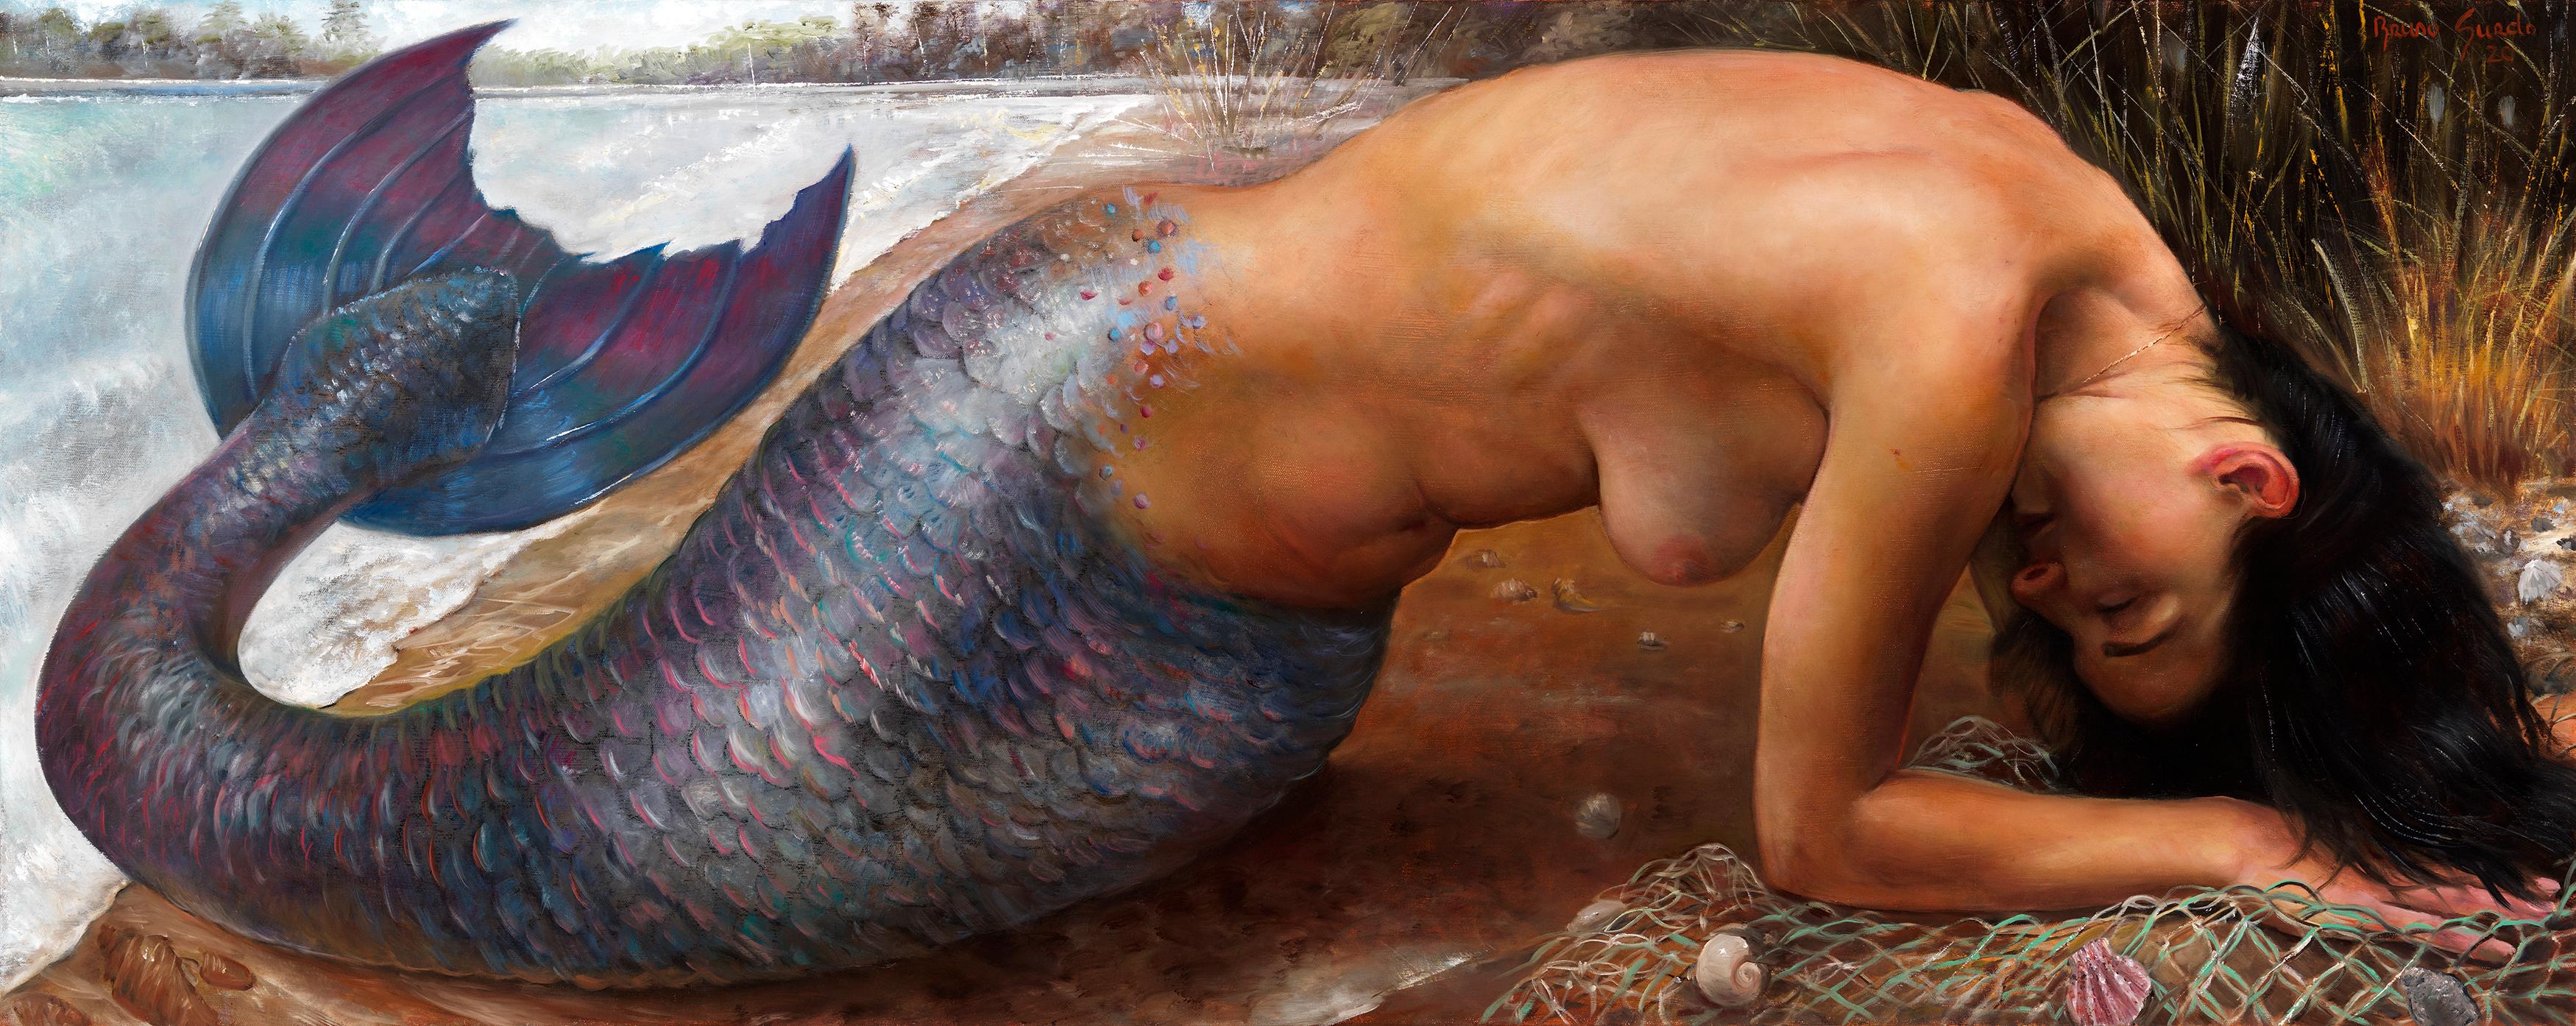 Submerged Mermaid - Dunkelhaarige, fair gefärbte Meerjungfrau, die aus dem Wasser aufsteigt